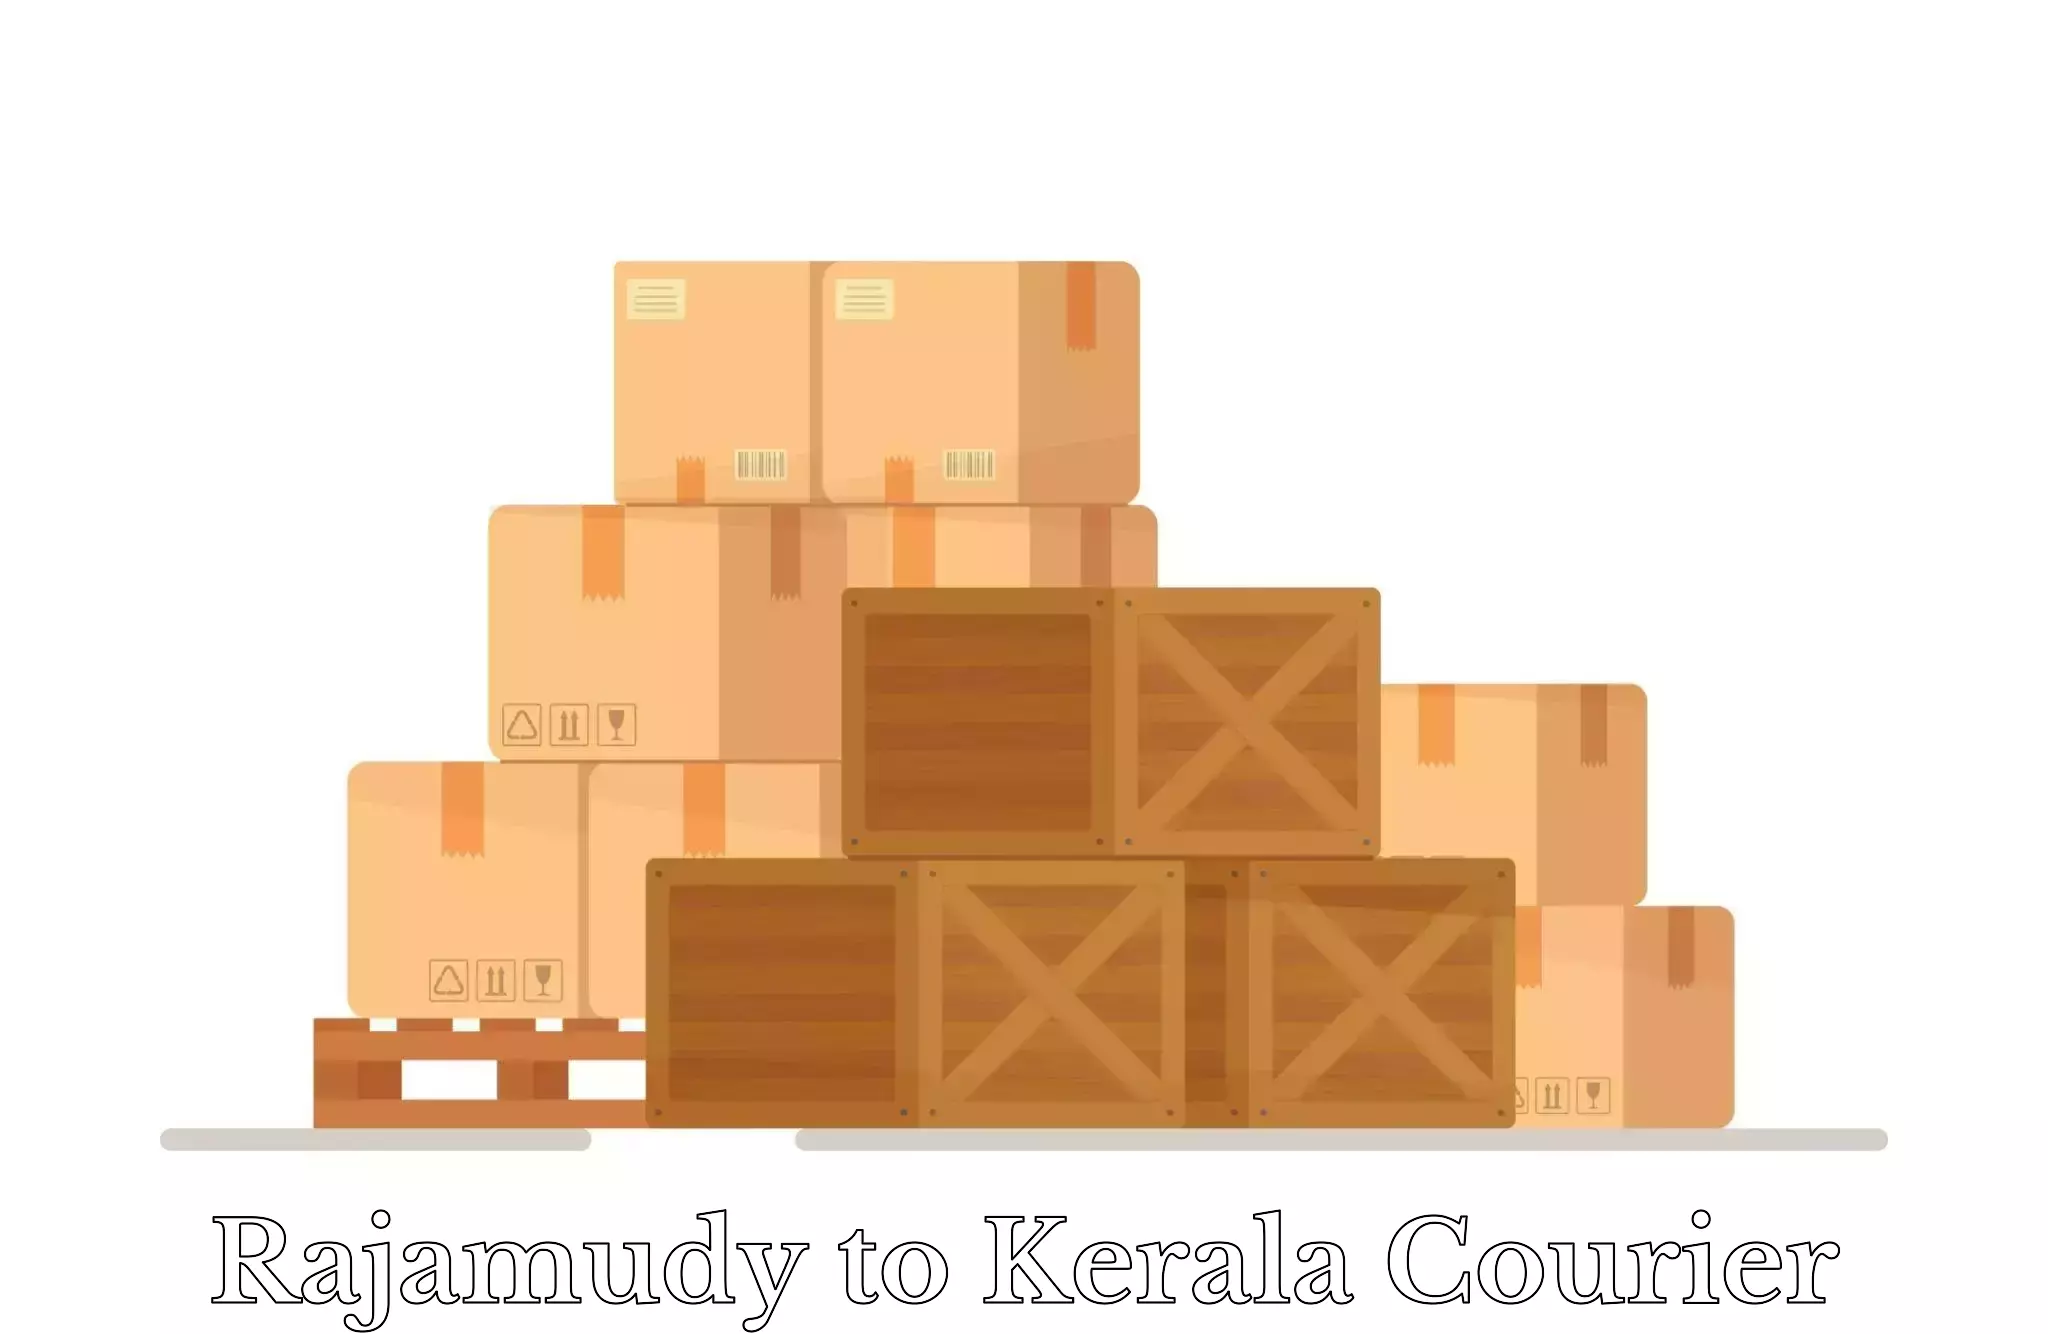 Doorstep luggage collection Rajamudy to Kerala